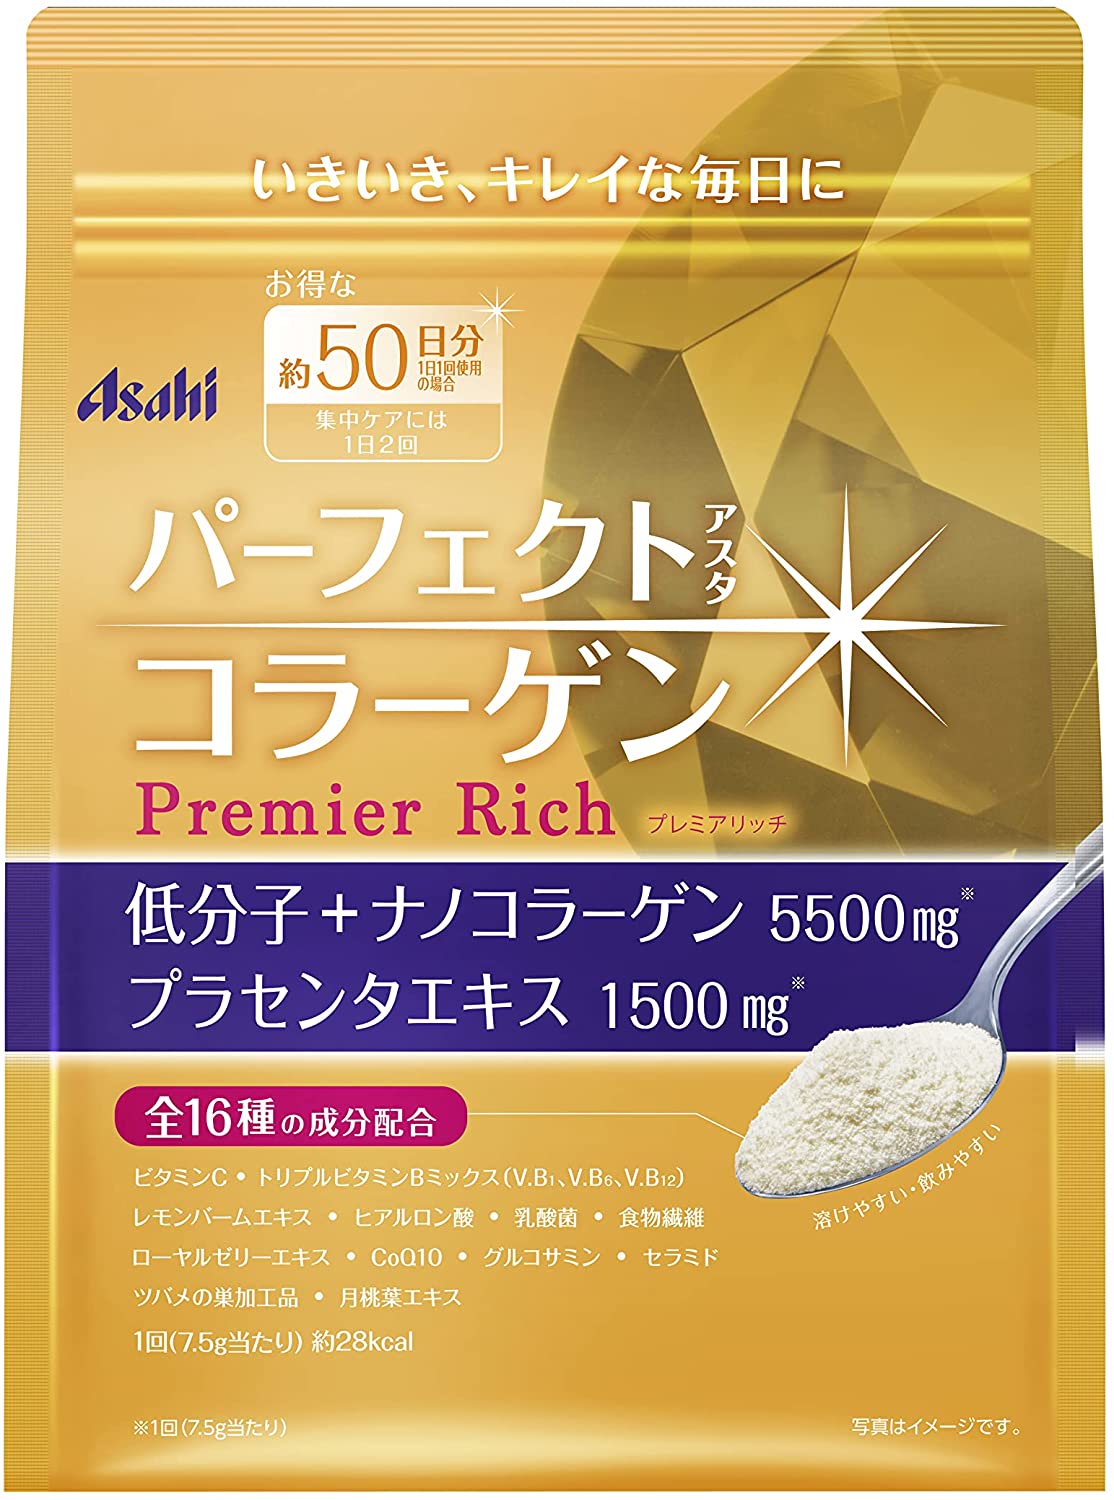 ASAHI PREMIER RICH - low molecular weight premium collagen with additives for skin rejuvenation, complex for 30 days